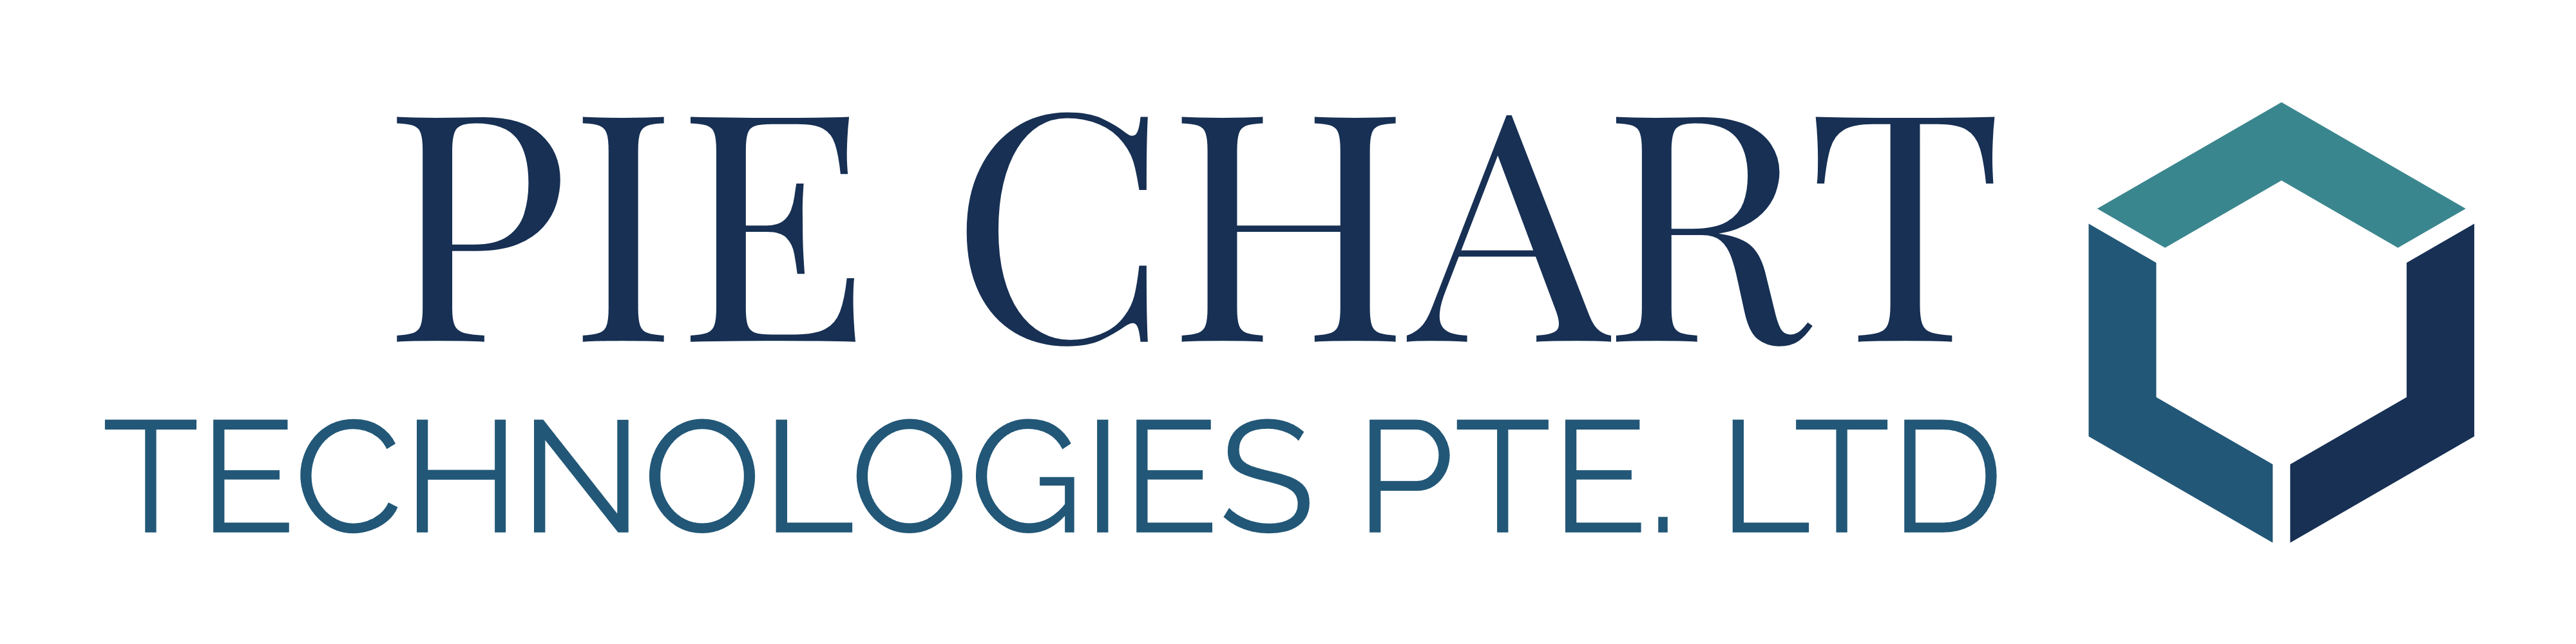 Pie Chart Technologies Pte. Ltd